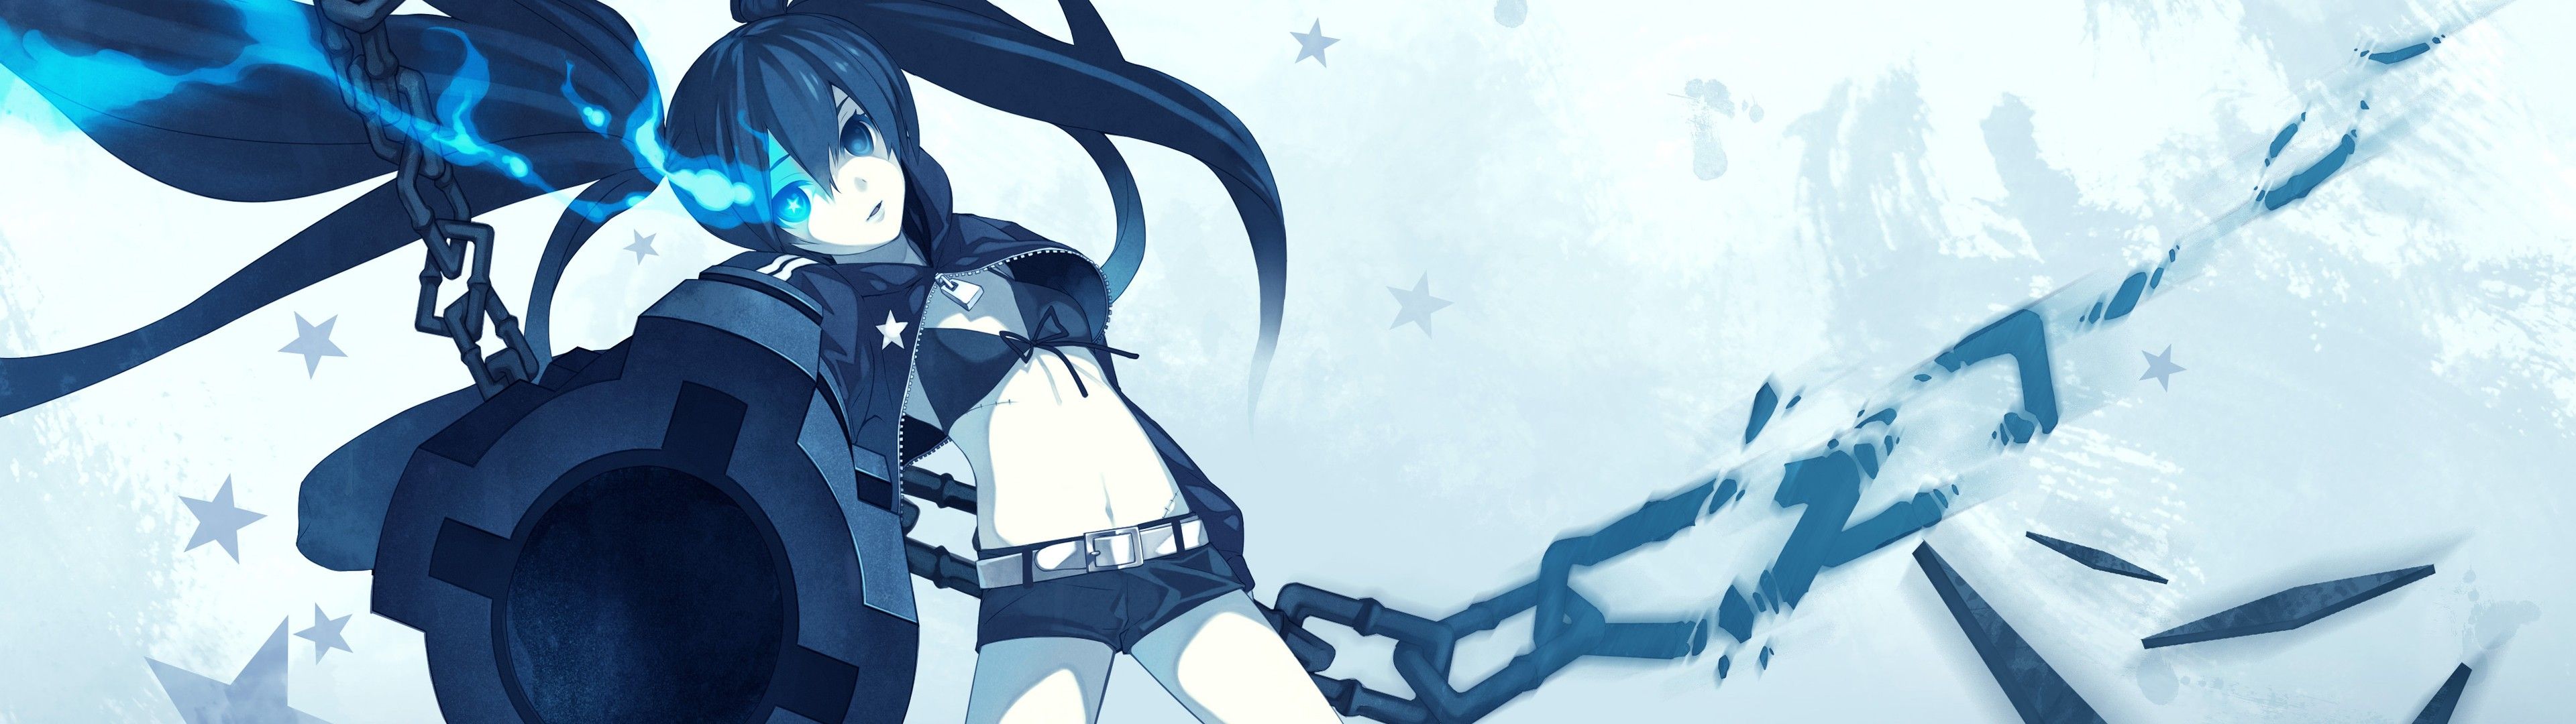 Dual Monitors Black Rock Shooter Anime Girls Long Hair Chains Anime Blue Eyes Wallpaper:3840x1080